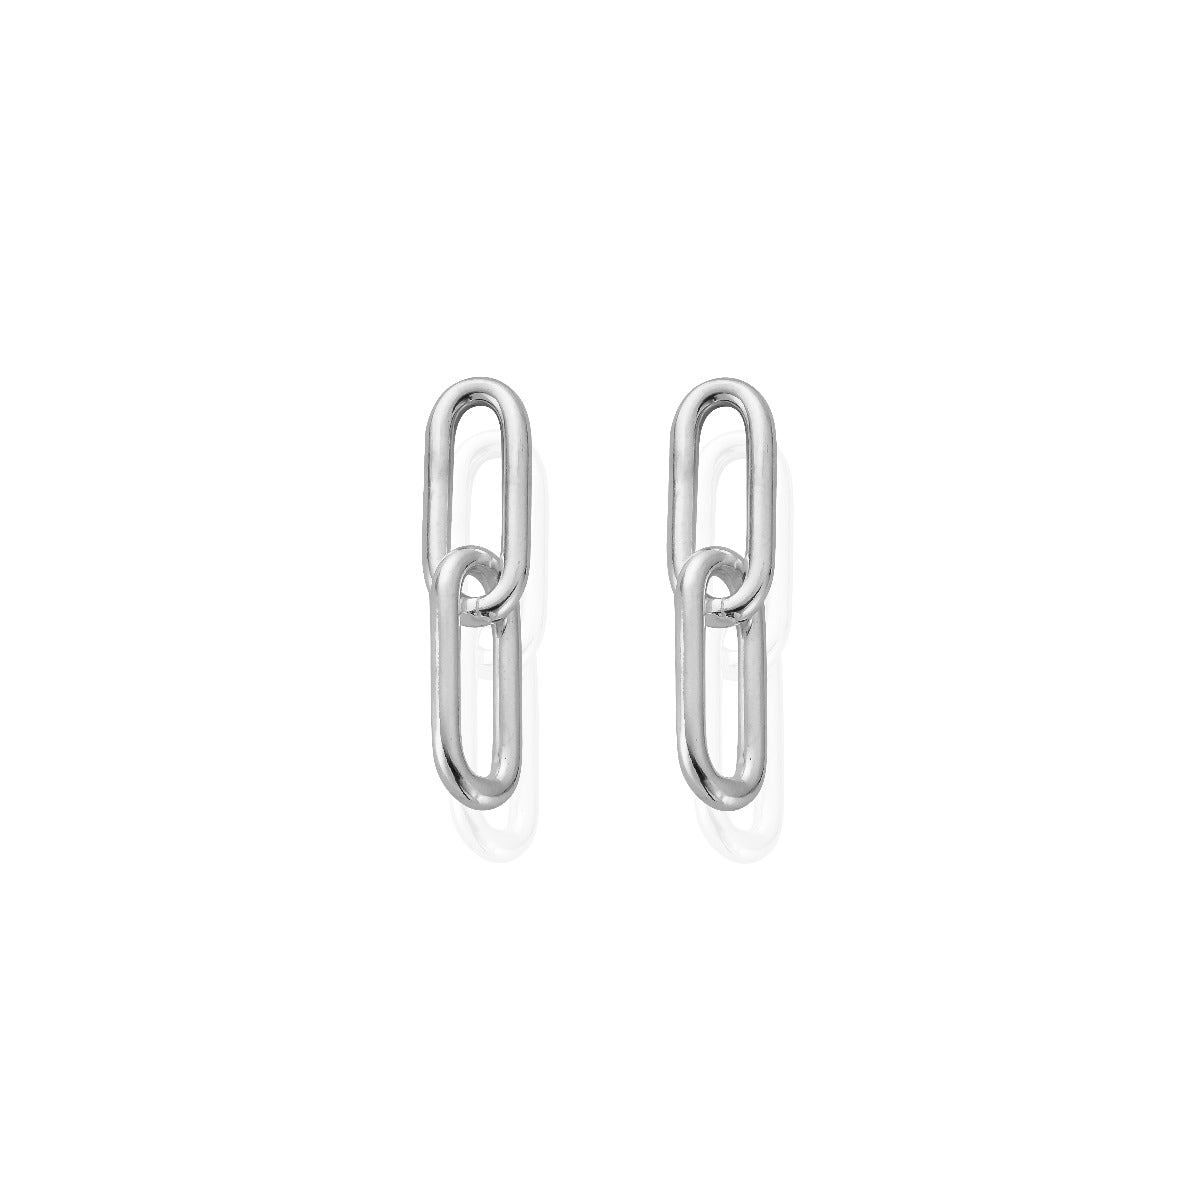 Medium Two Link Earrings | UK Made | ChloBo